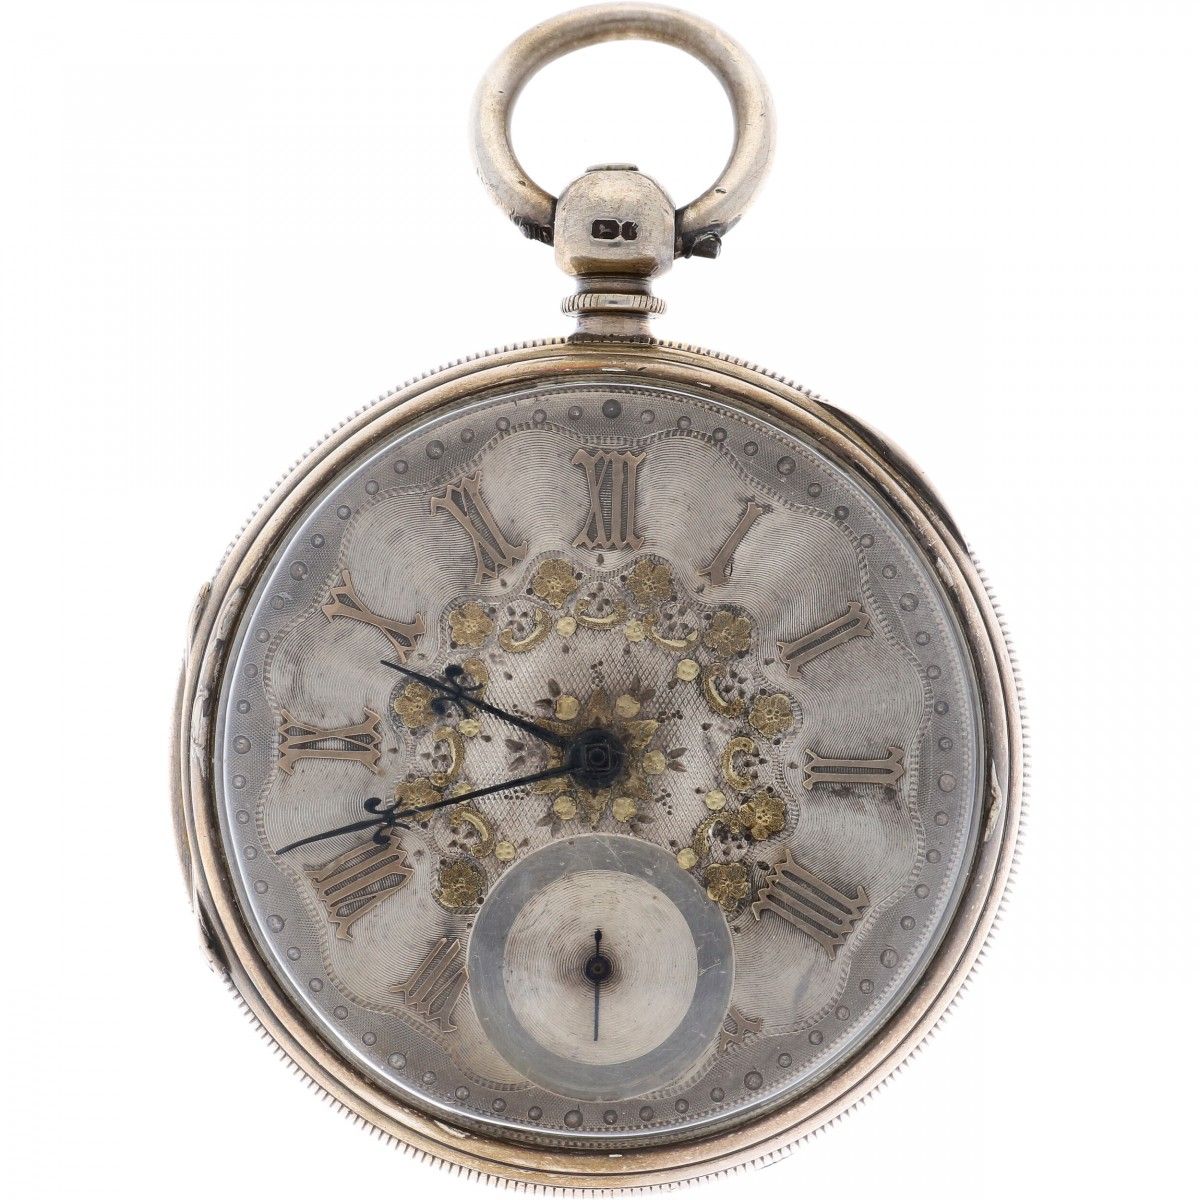 Pocket Watch Verge Fusee - ca. 1870 表壳：银质925/1000 - 弧形浮雕 - 表盘由银色制成。链子状况良好，机芯处于工作&hellip;